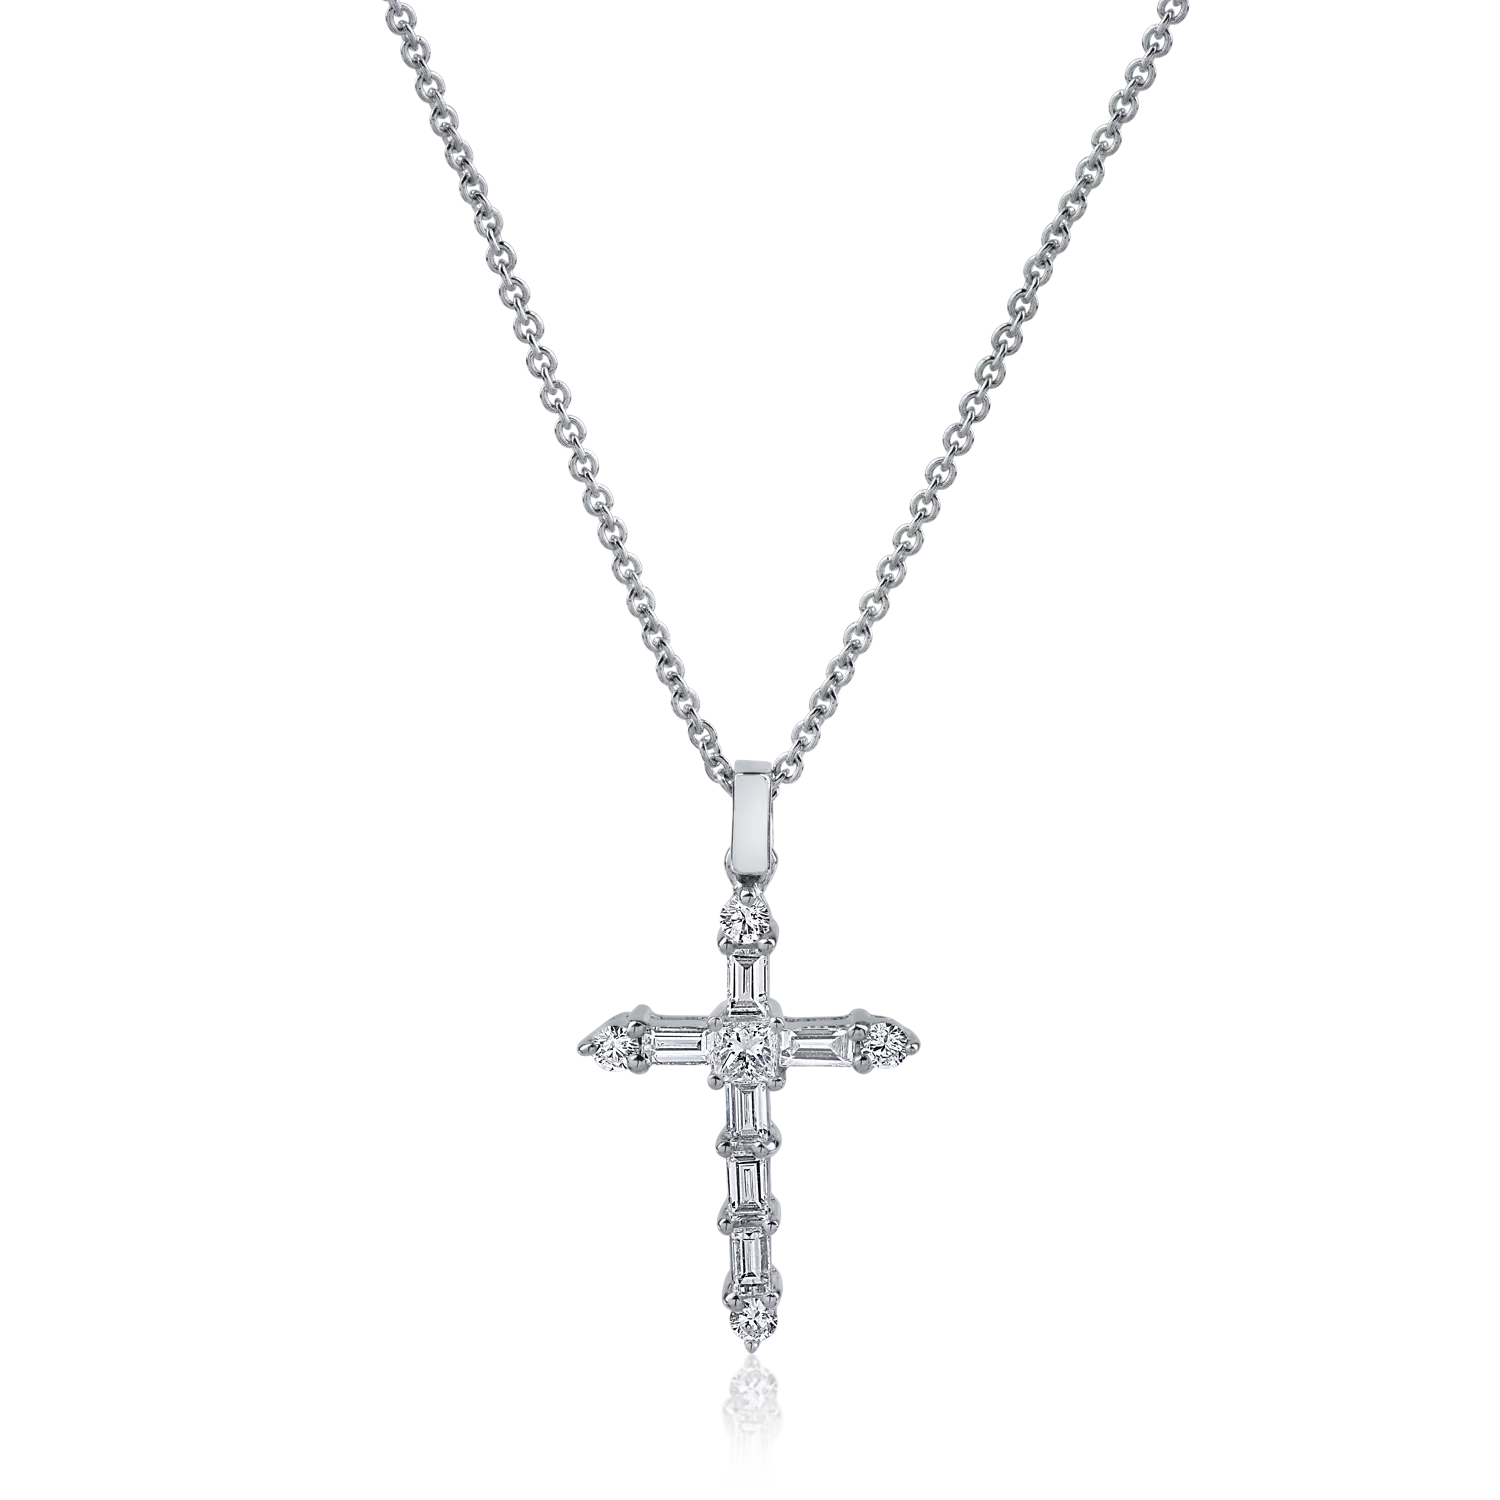 White gold cross pendant chain with 0.44ct diamonds